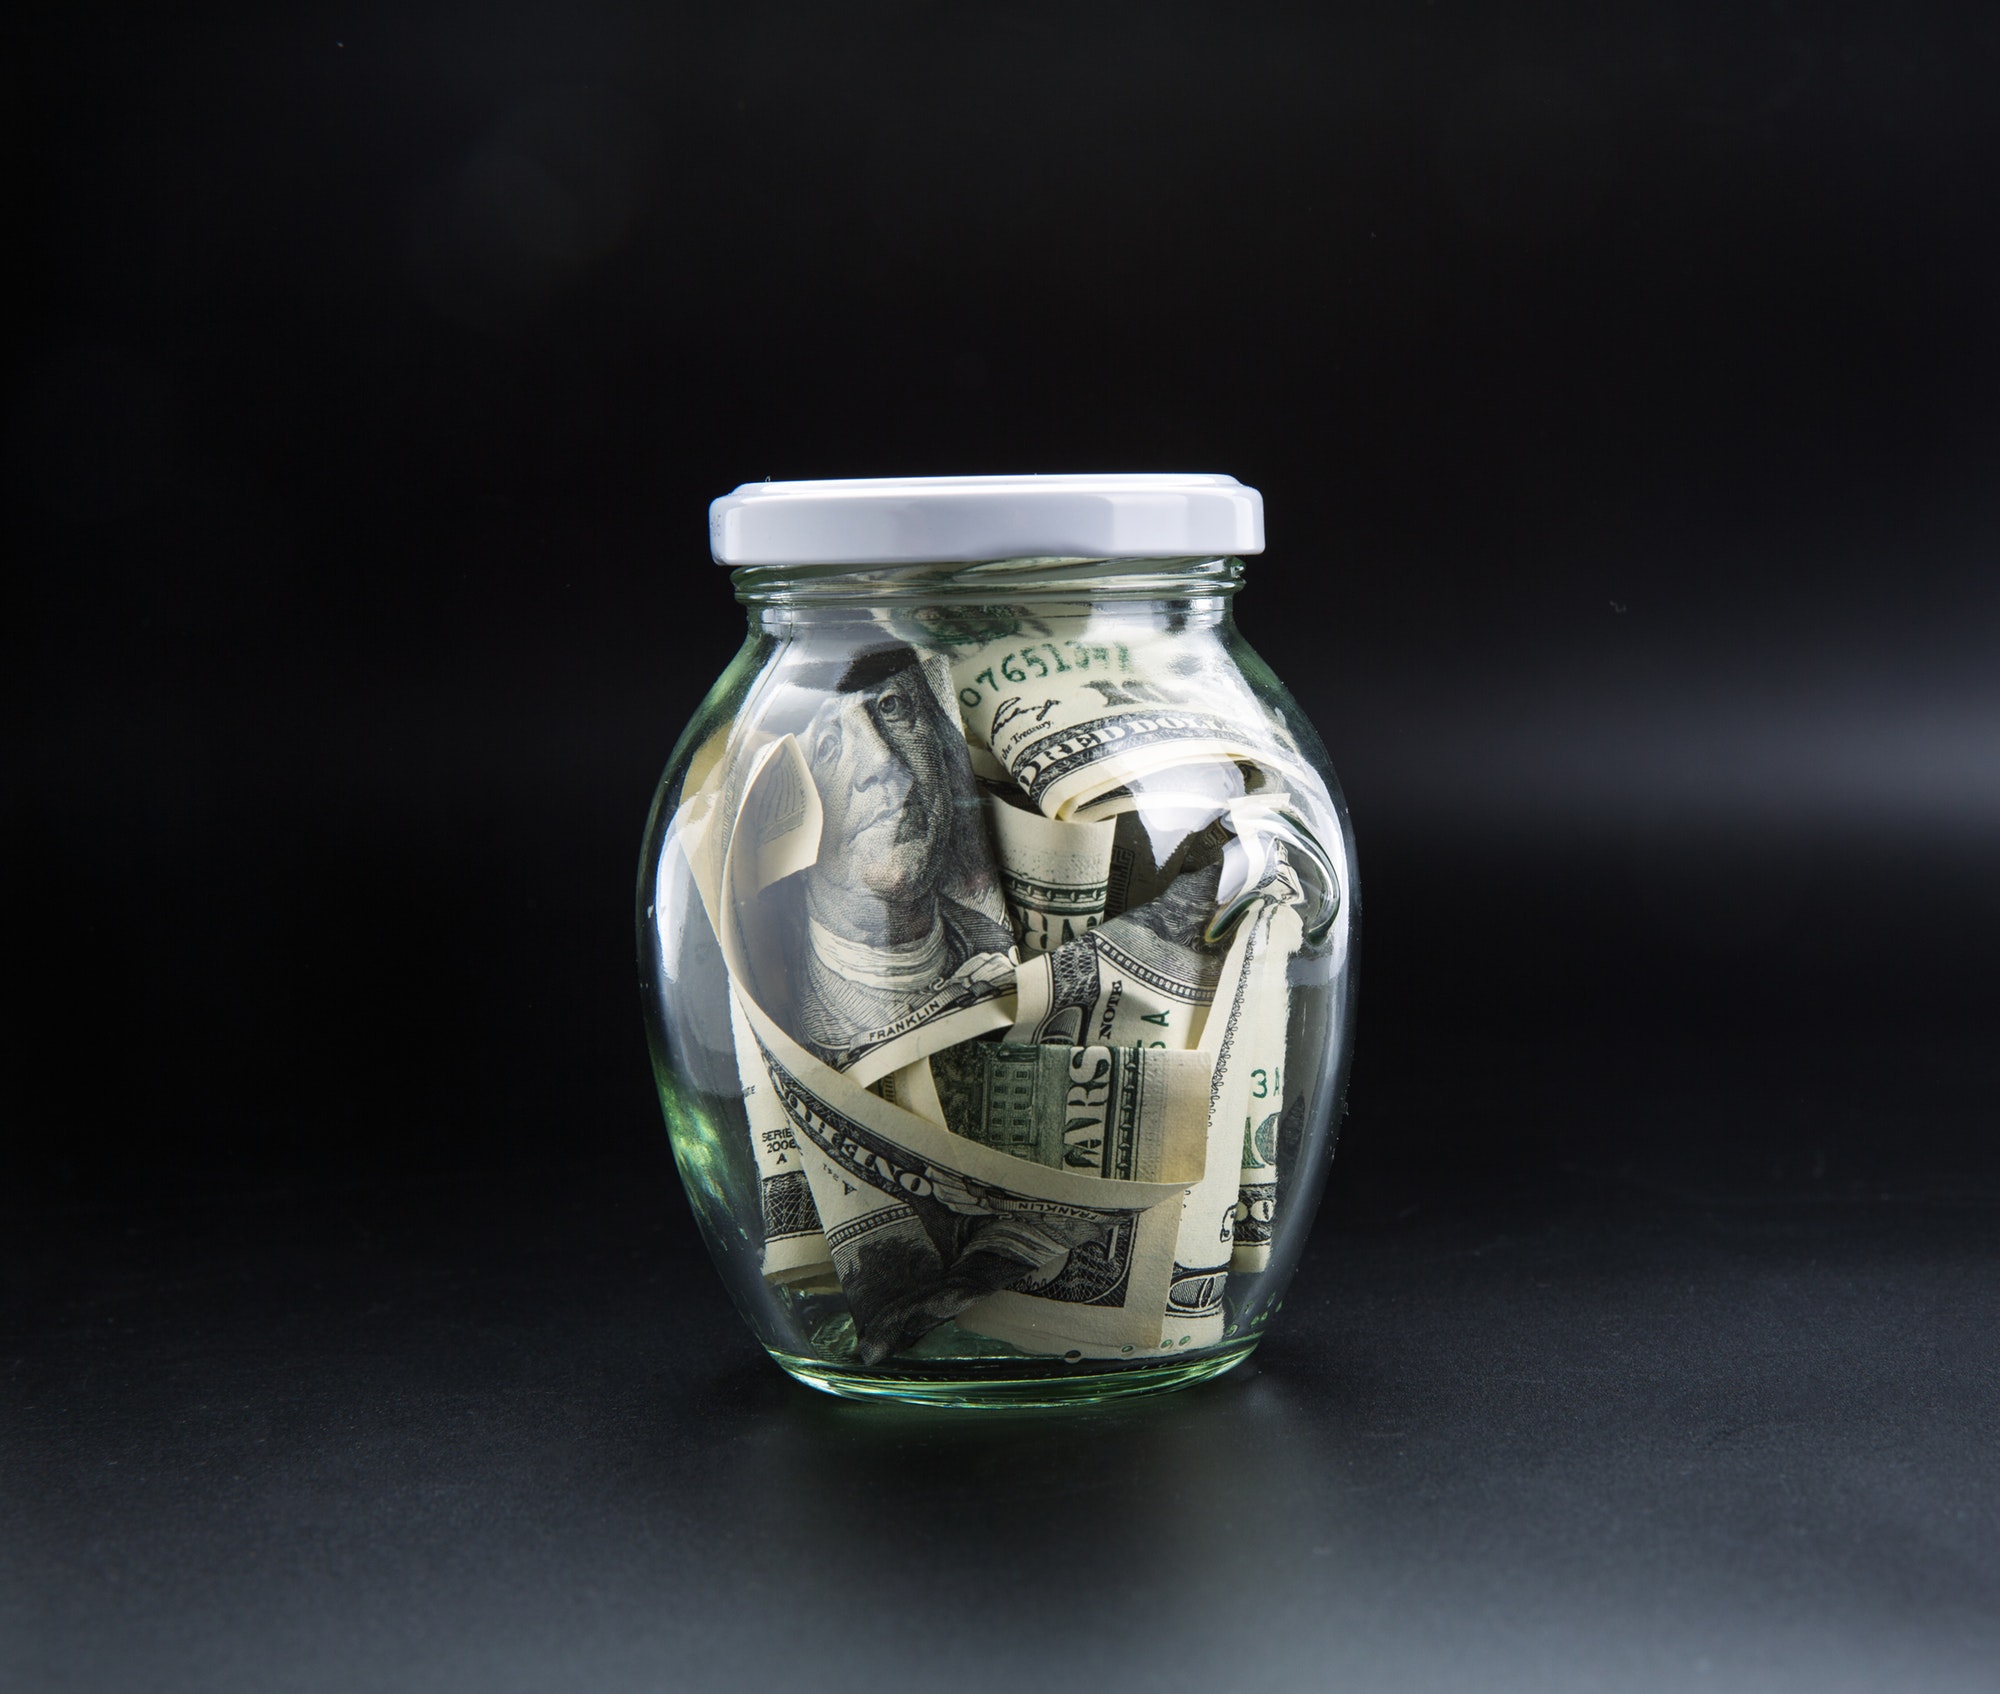 Money saving concept, glass jar full of dollars